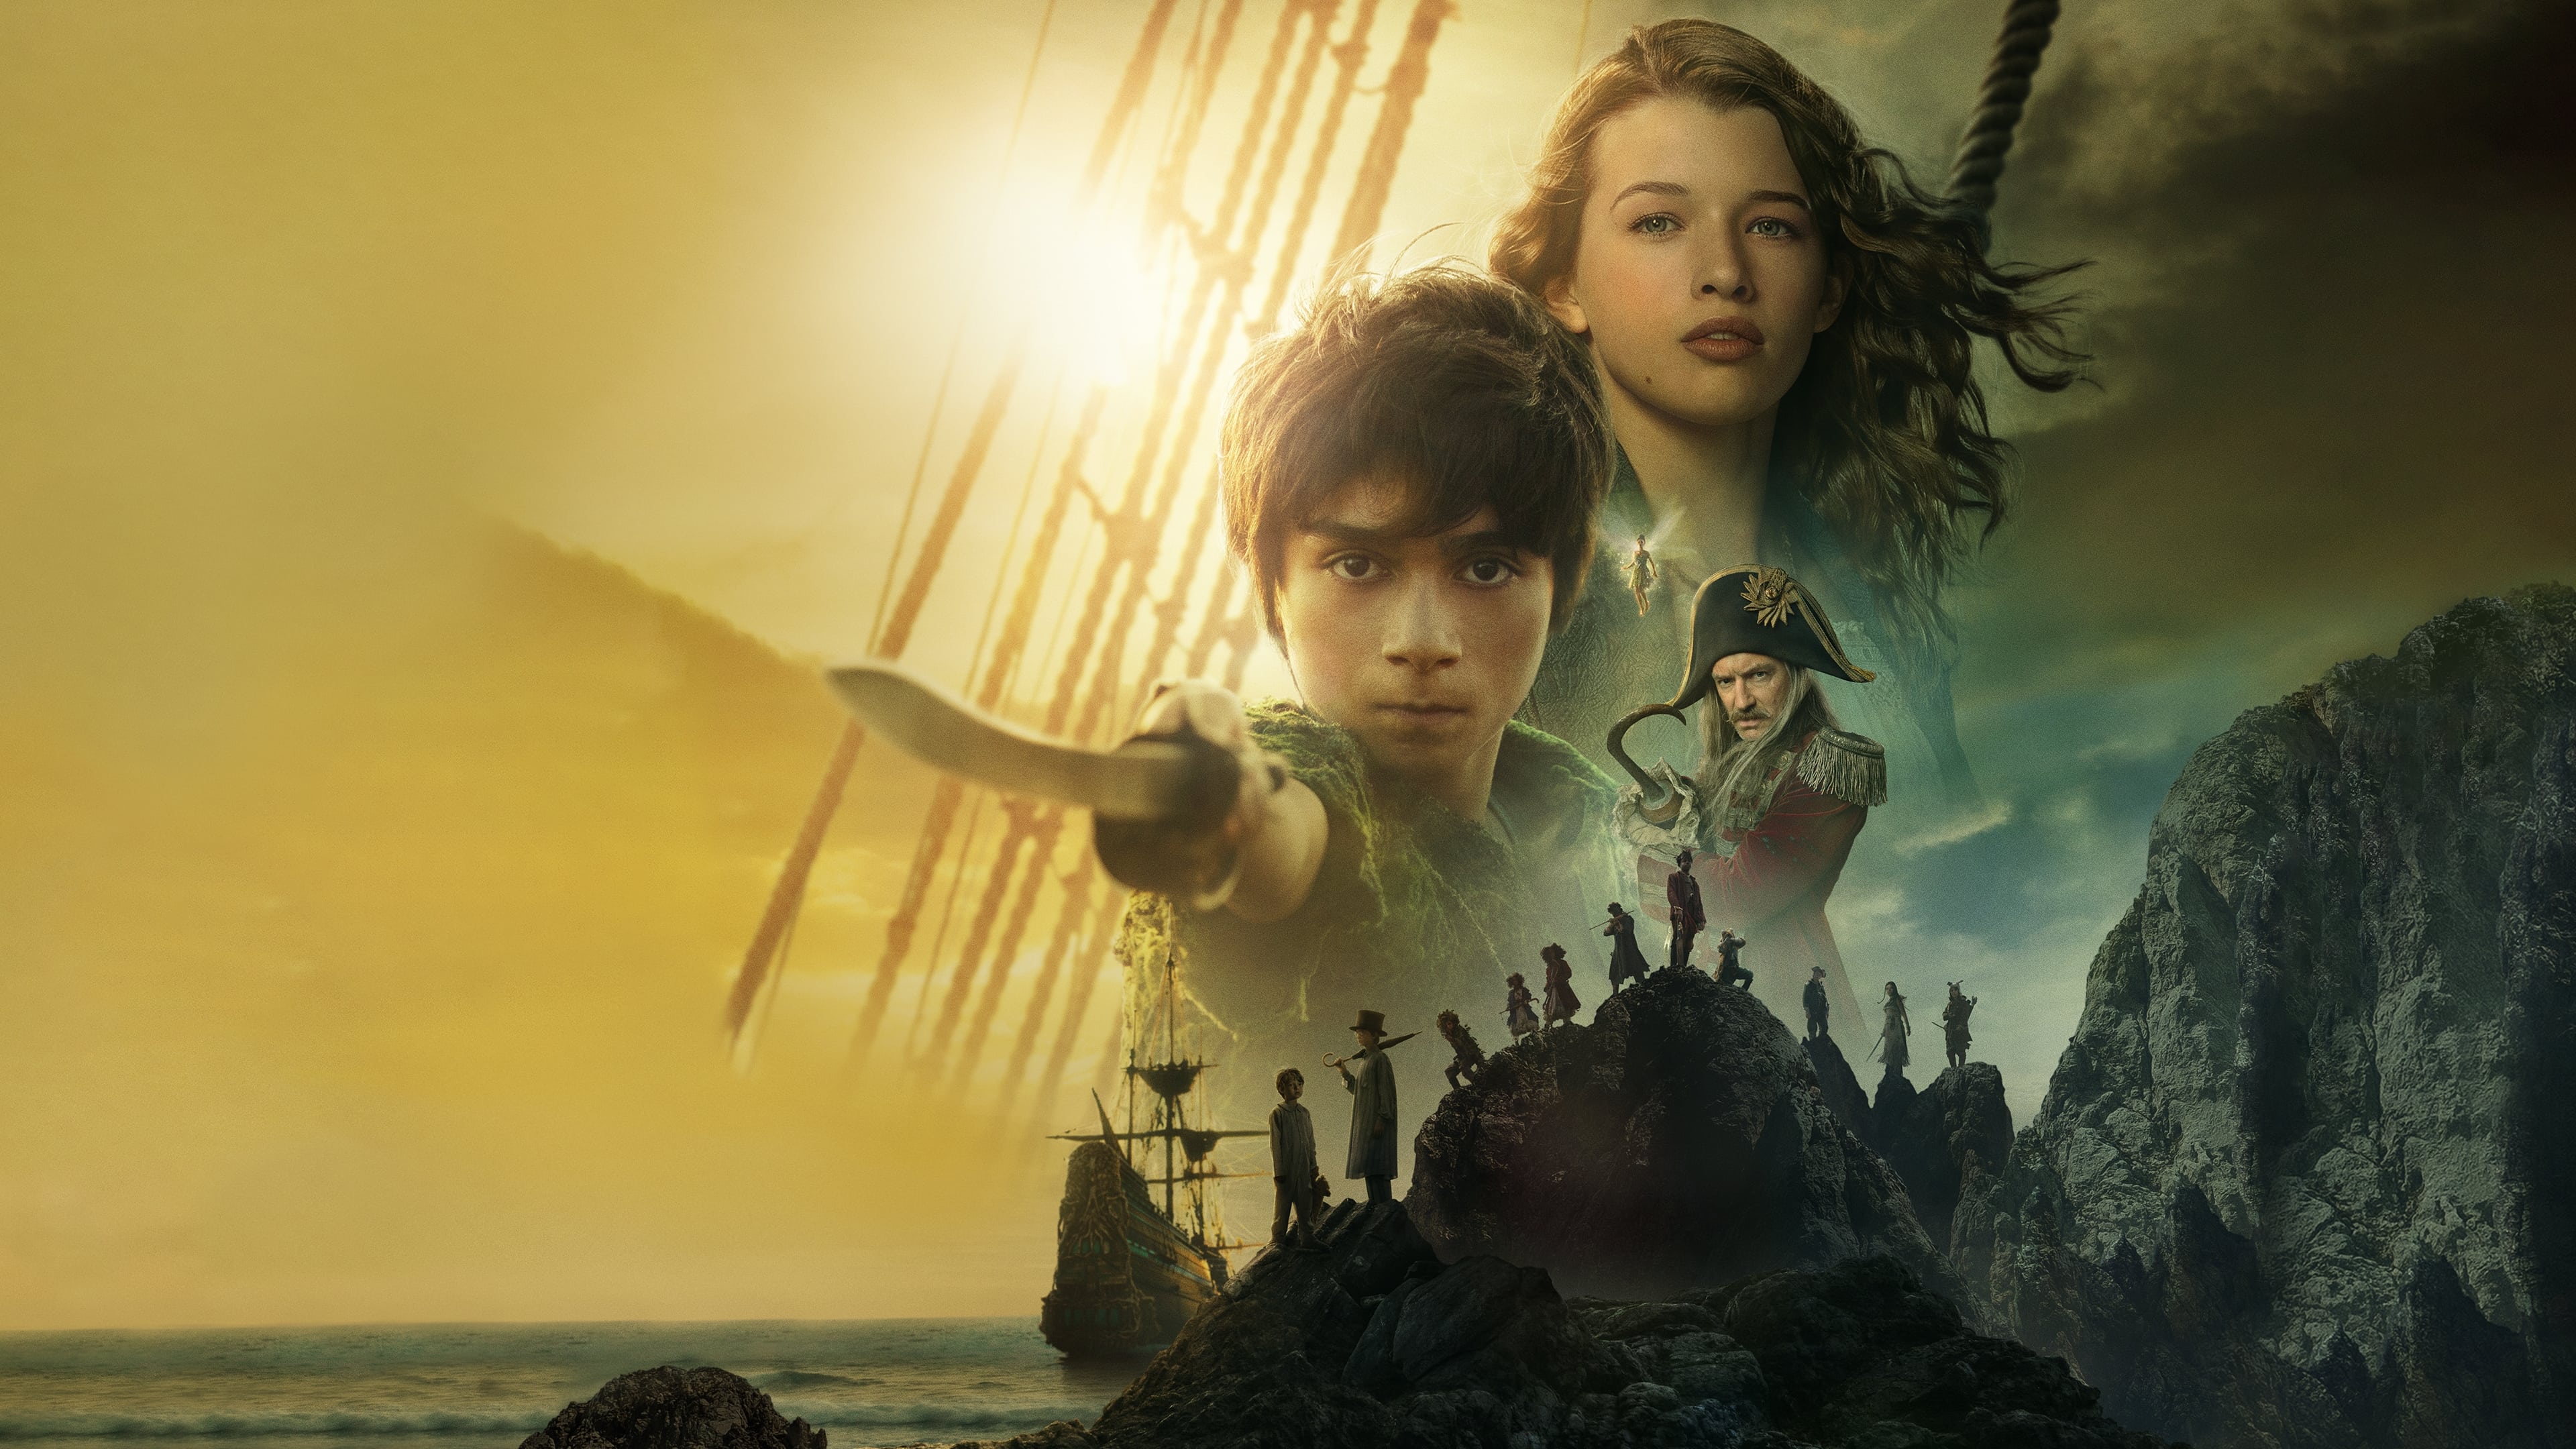 Peter Pan & Wendy Box Office Hit